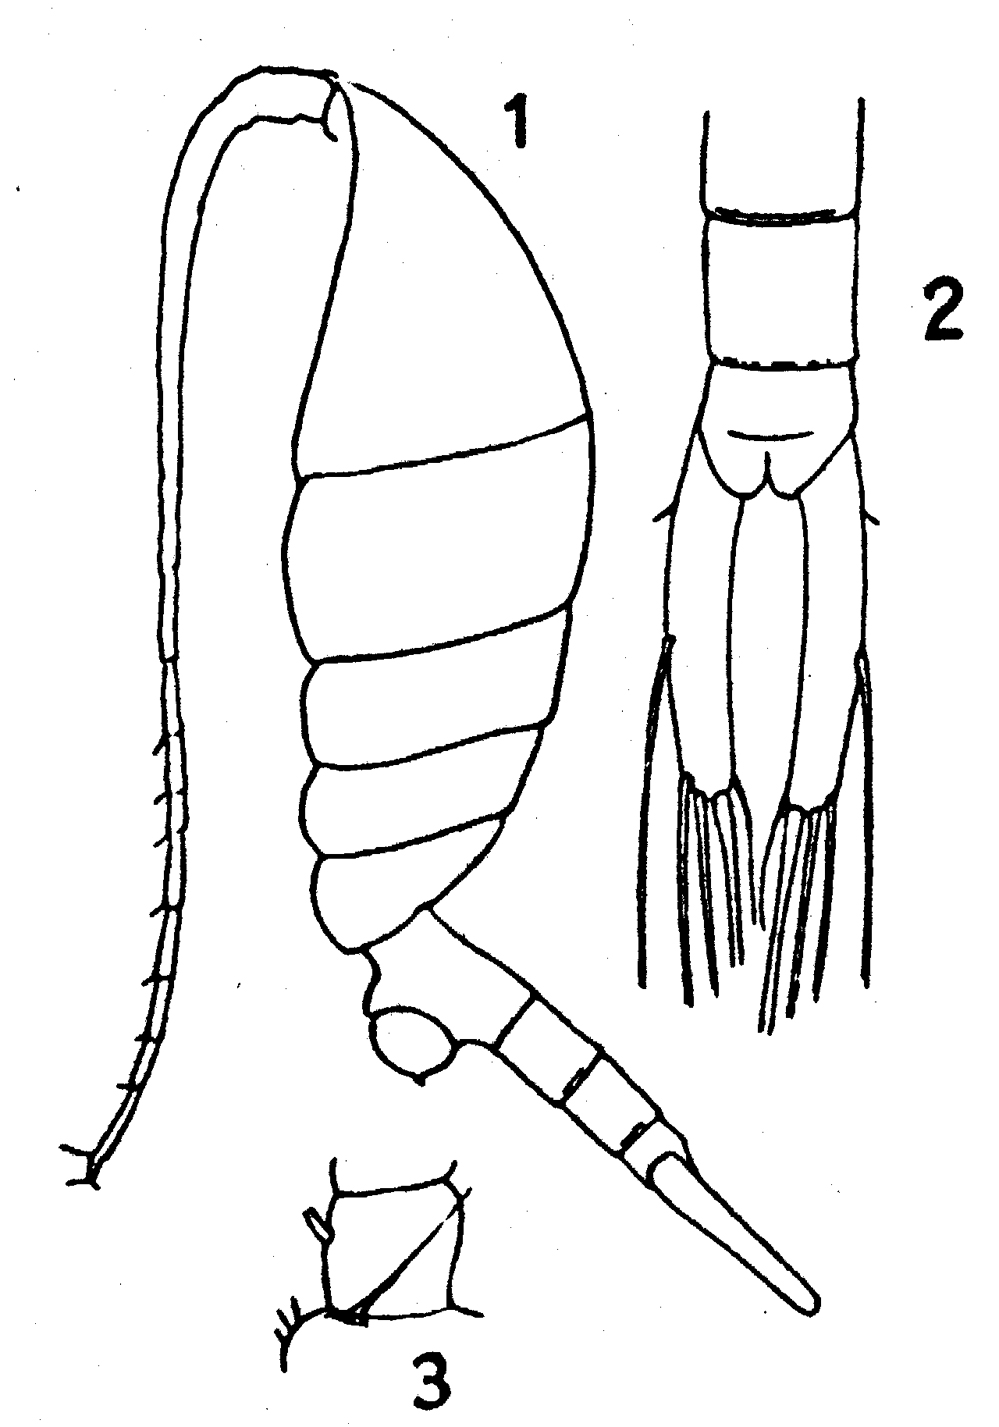 Species Lucicutia flavicornis - Plate 17 of morphological figures